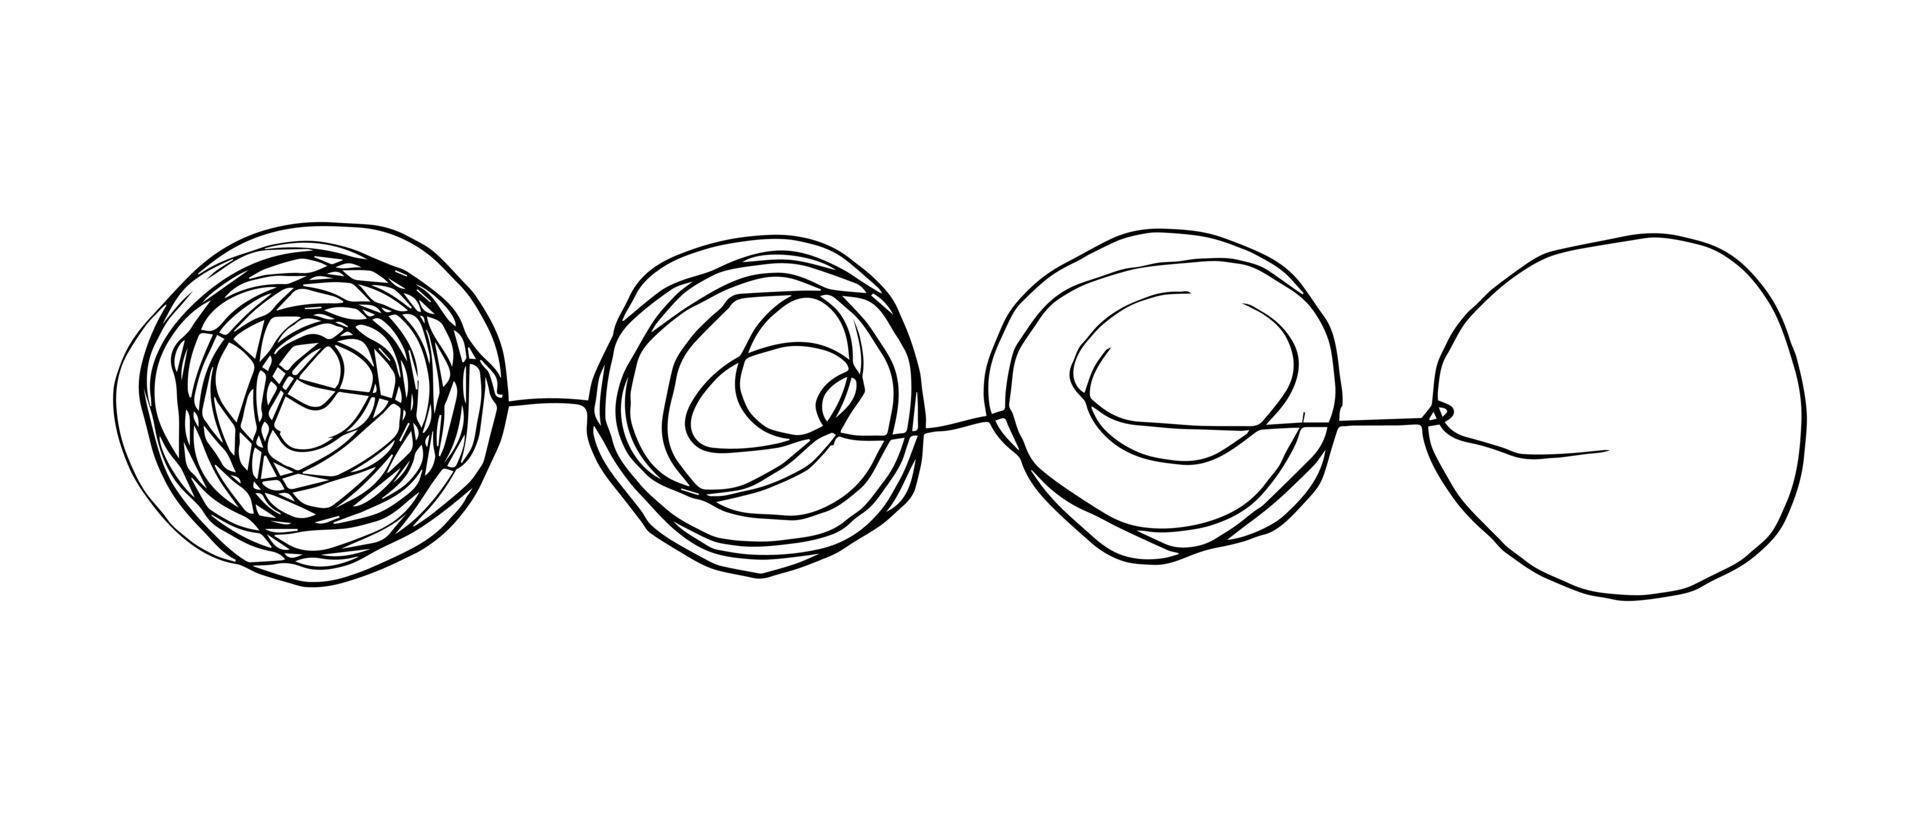 dibujado a mano de boceto de garabato de enredo. garabato abstracto, patrón de garabato de caos aislado sobre fondo blanco. ilustración vectorial vector